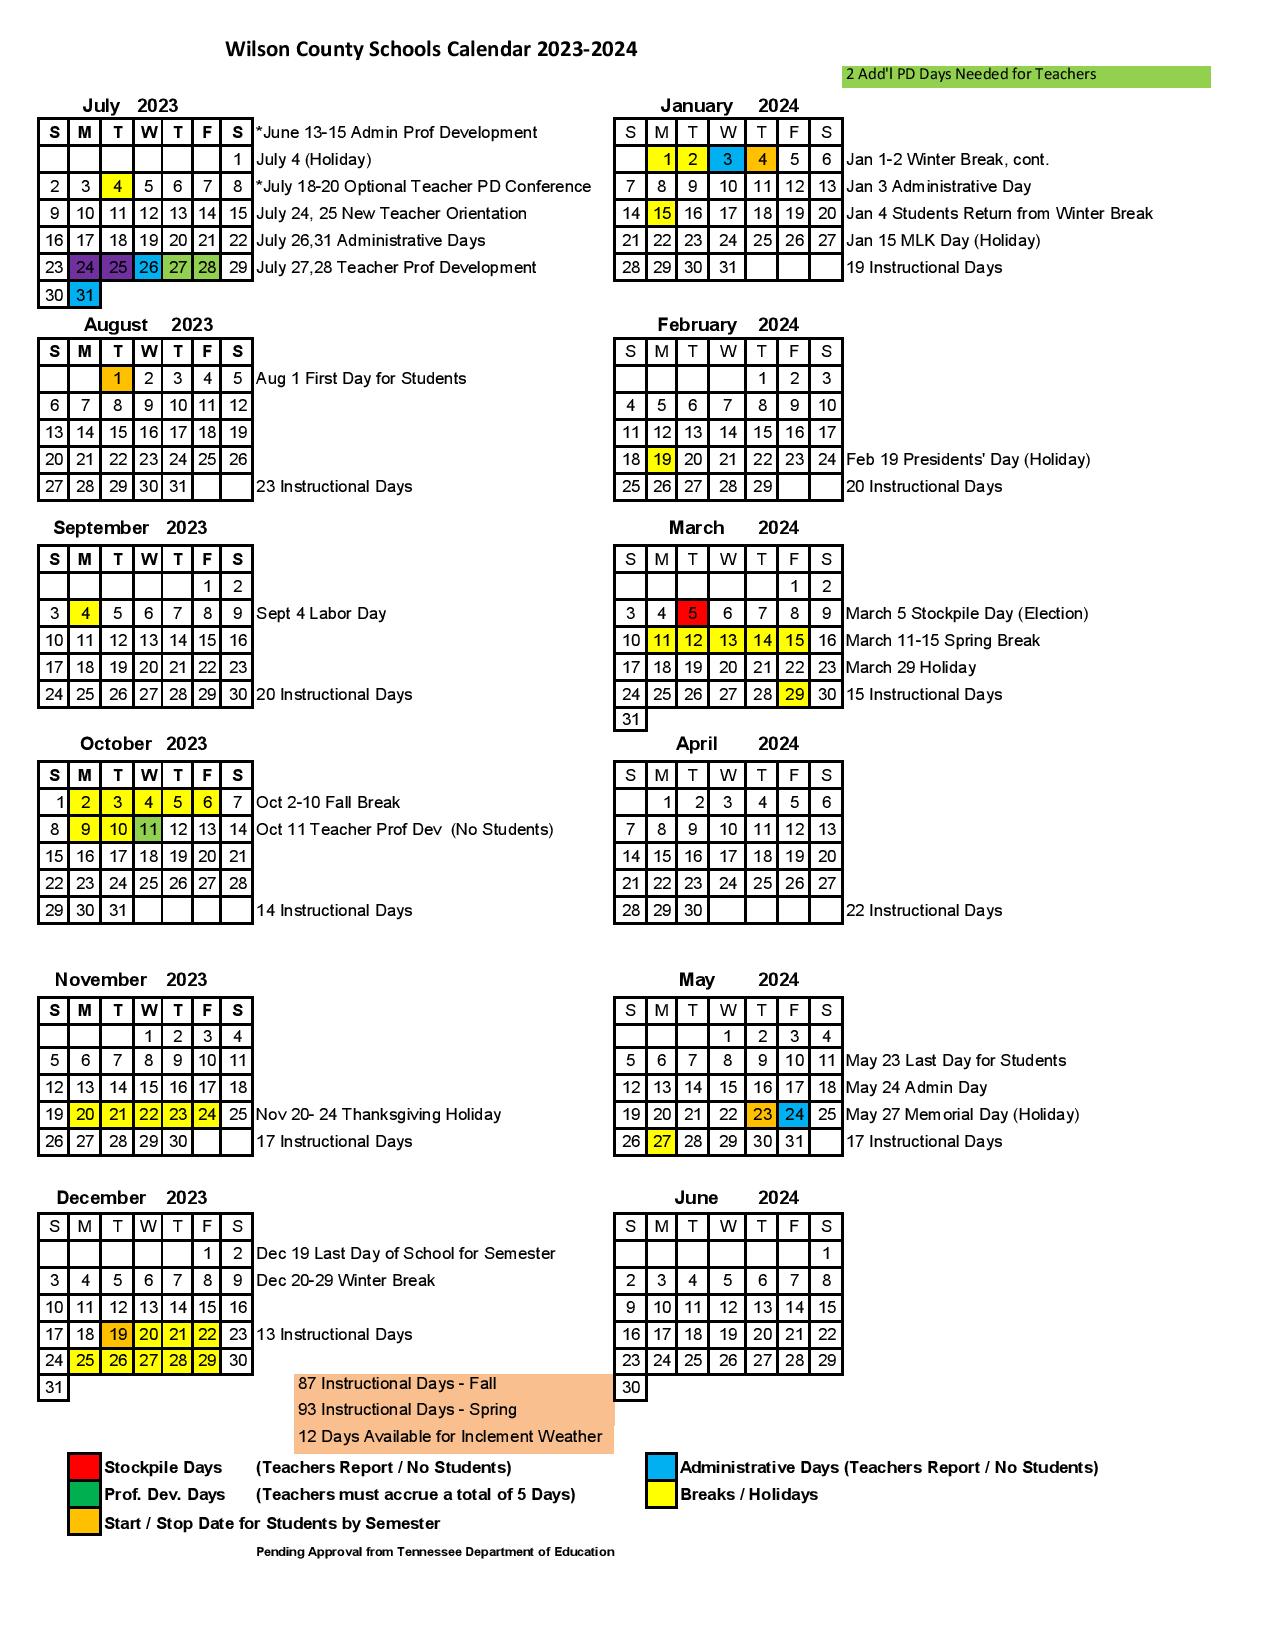 Wilson County Schools Calendar 20232024 (Holiday Breaks)